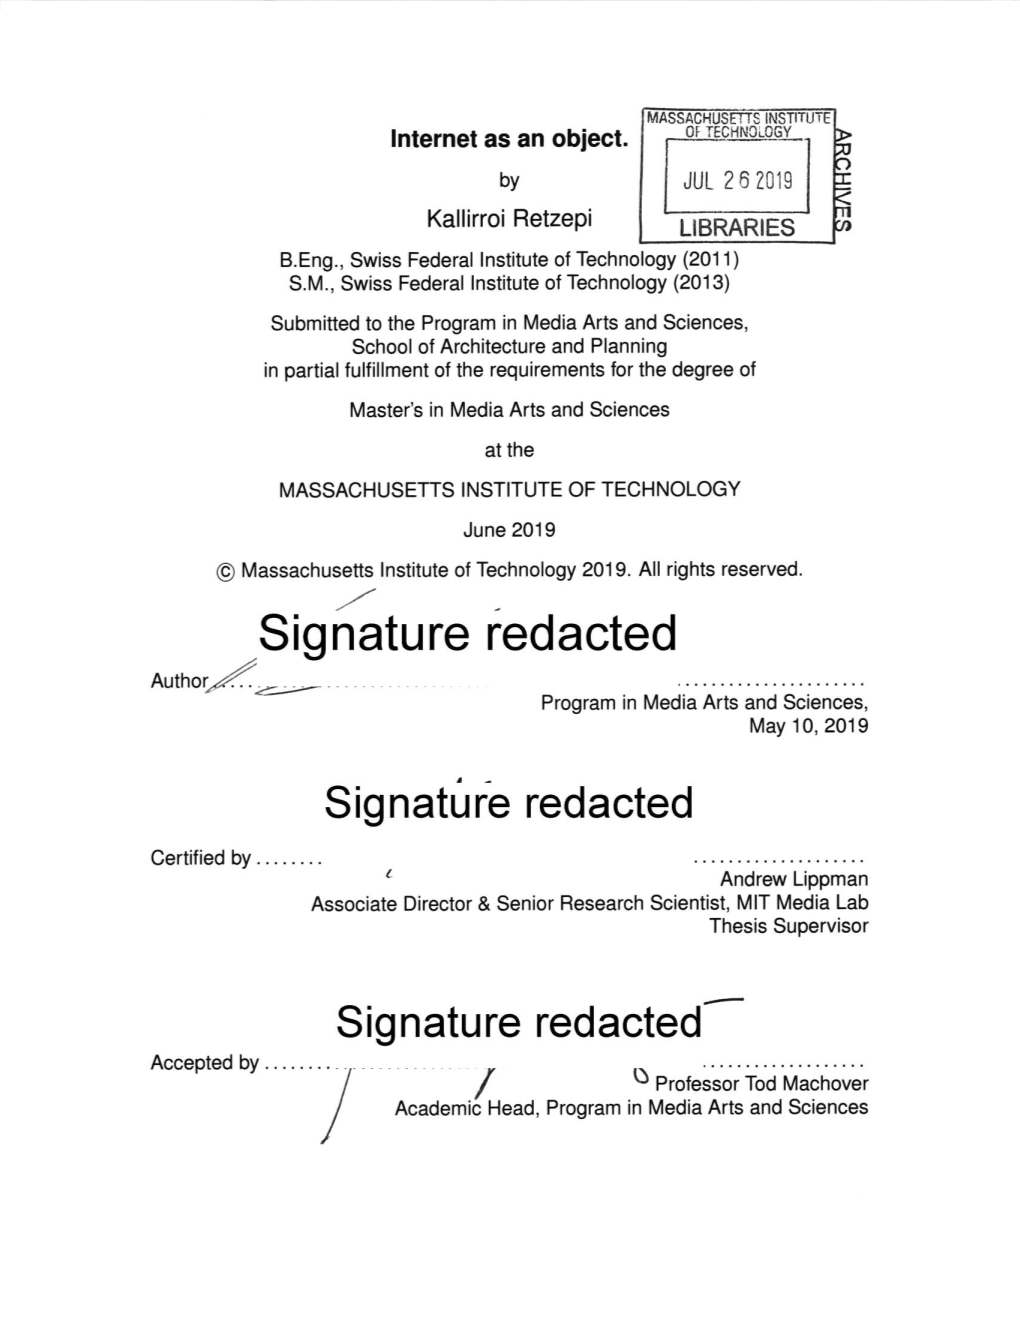 Signature Redacted a Uthoree